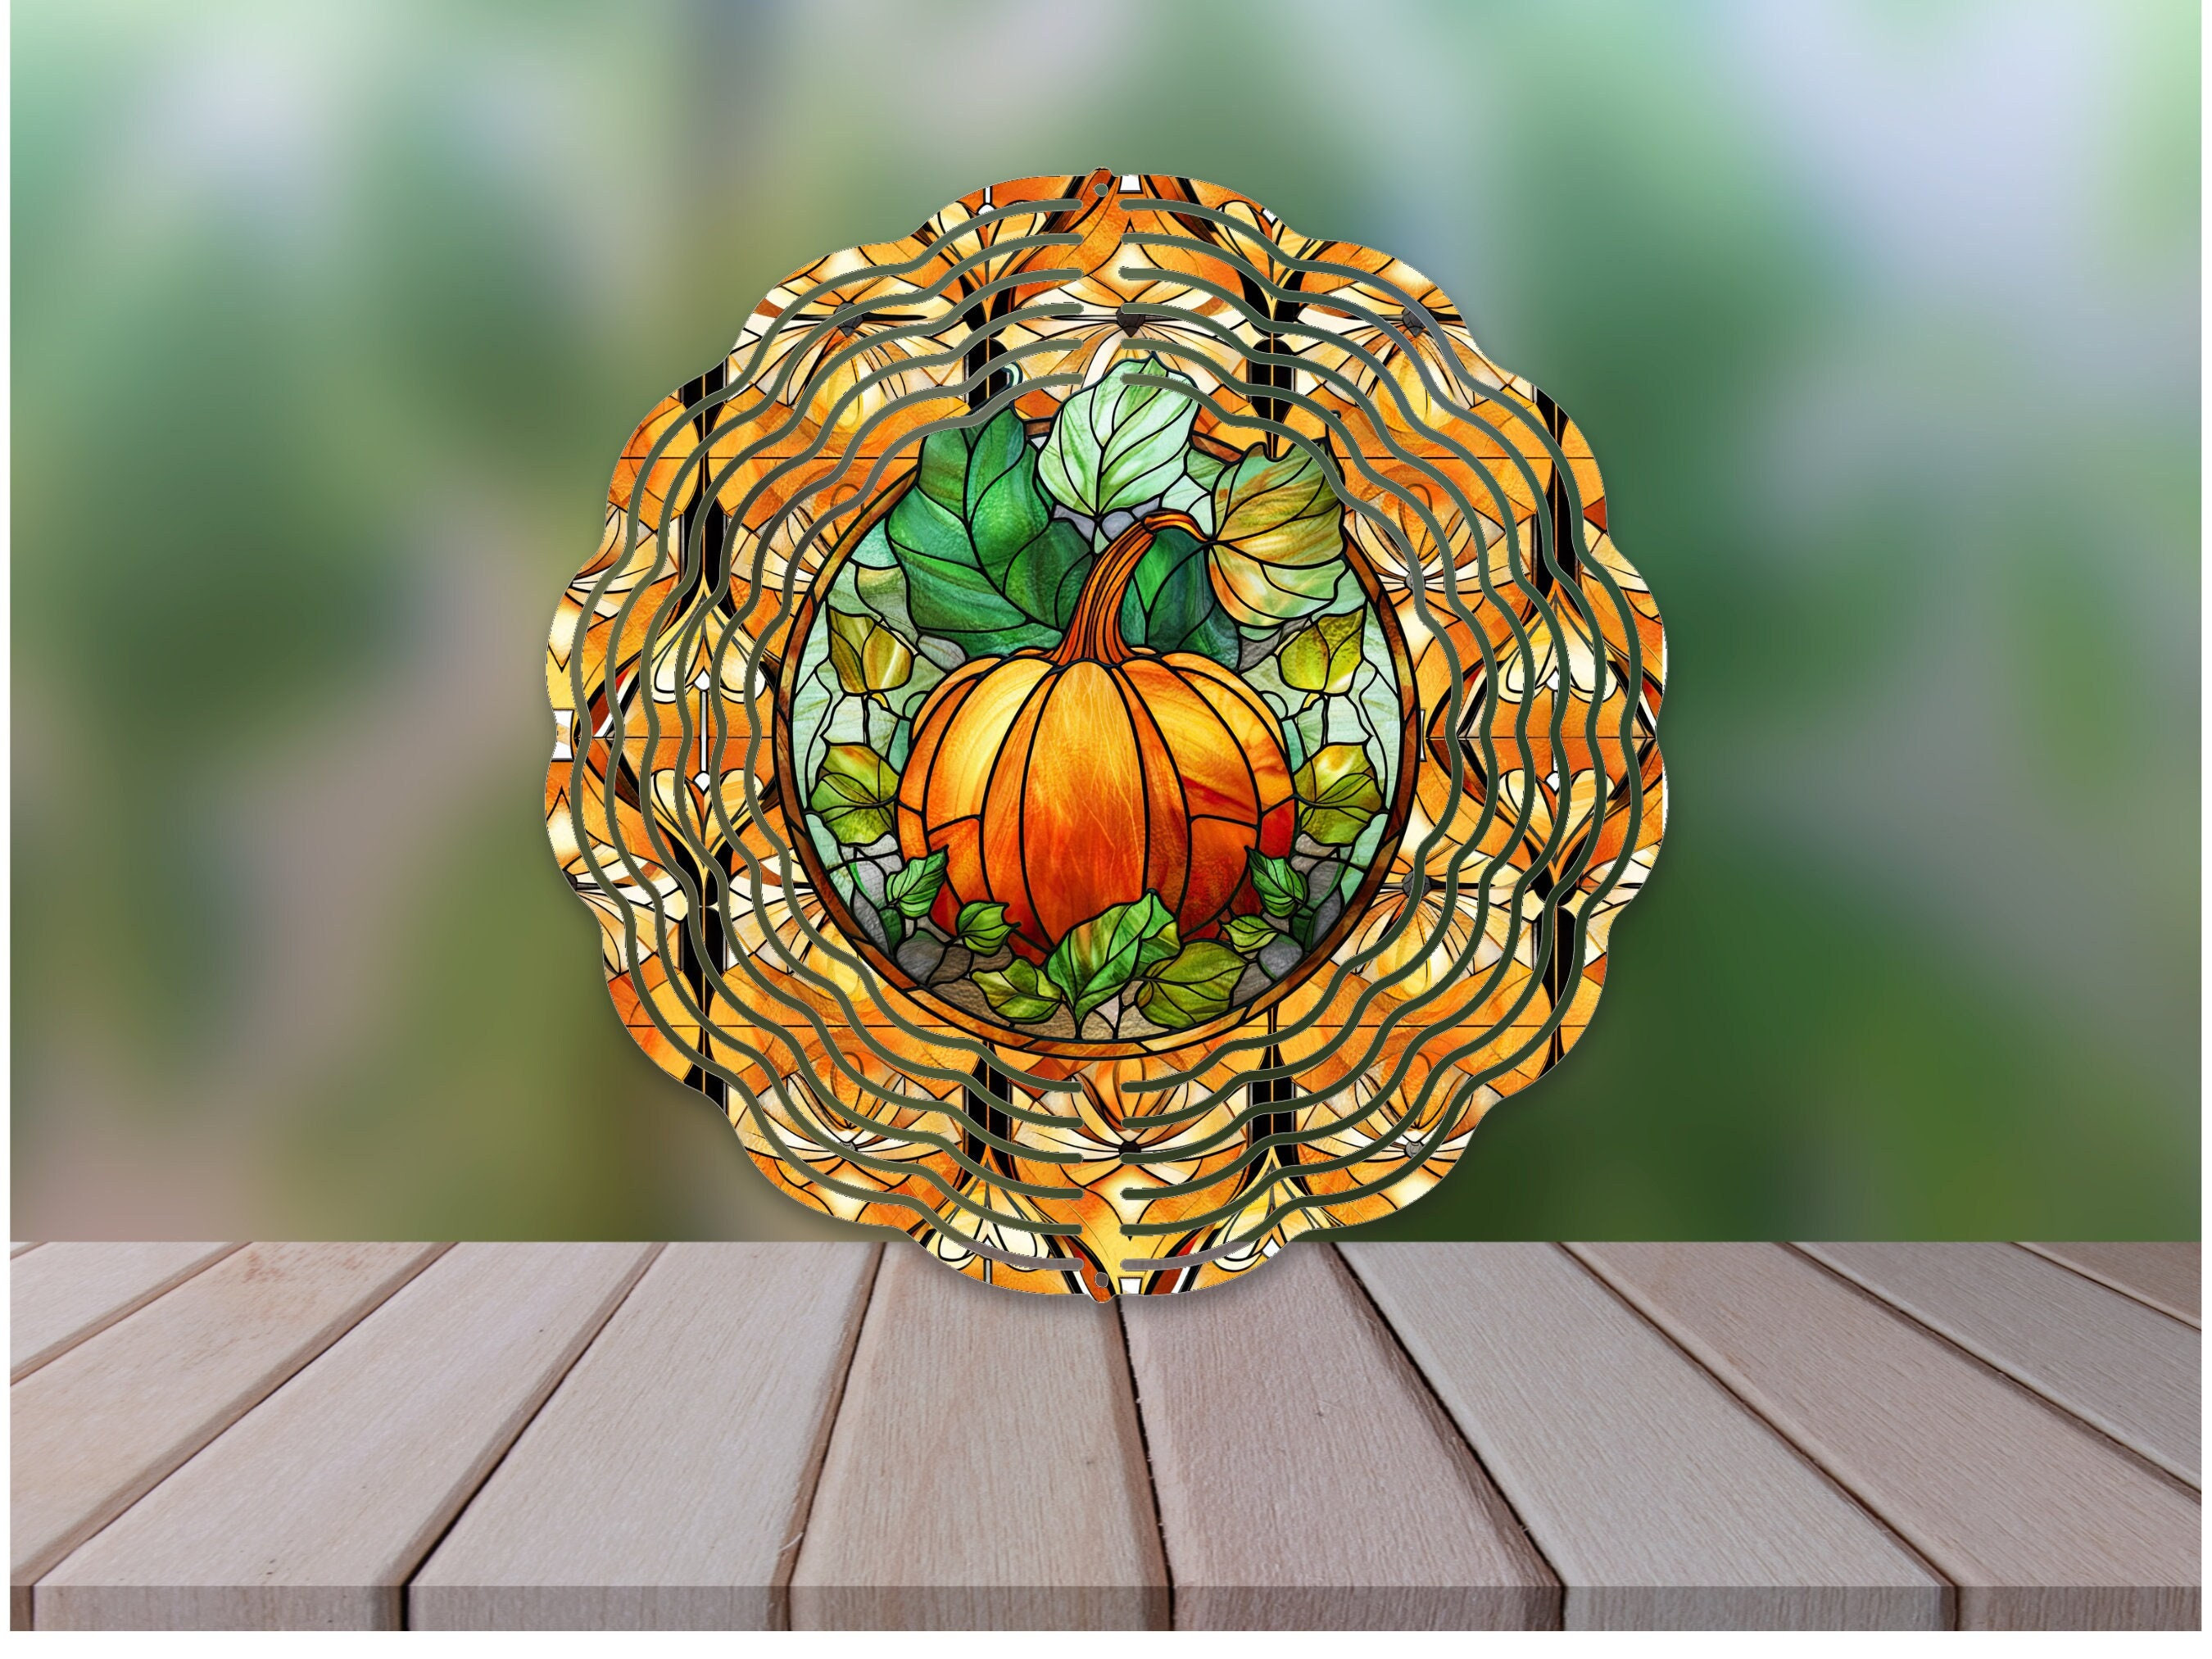 Umpkin Fall Autumn Stained Glass Wind Spinner For Yard And Garden, Outdoor Garden Yard Decoration, Garden Decor, Chime Art Gift